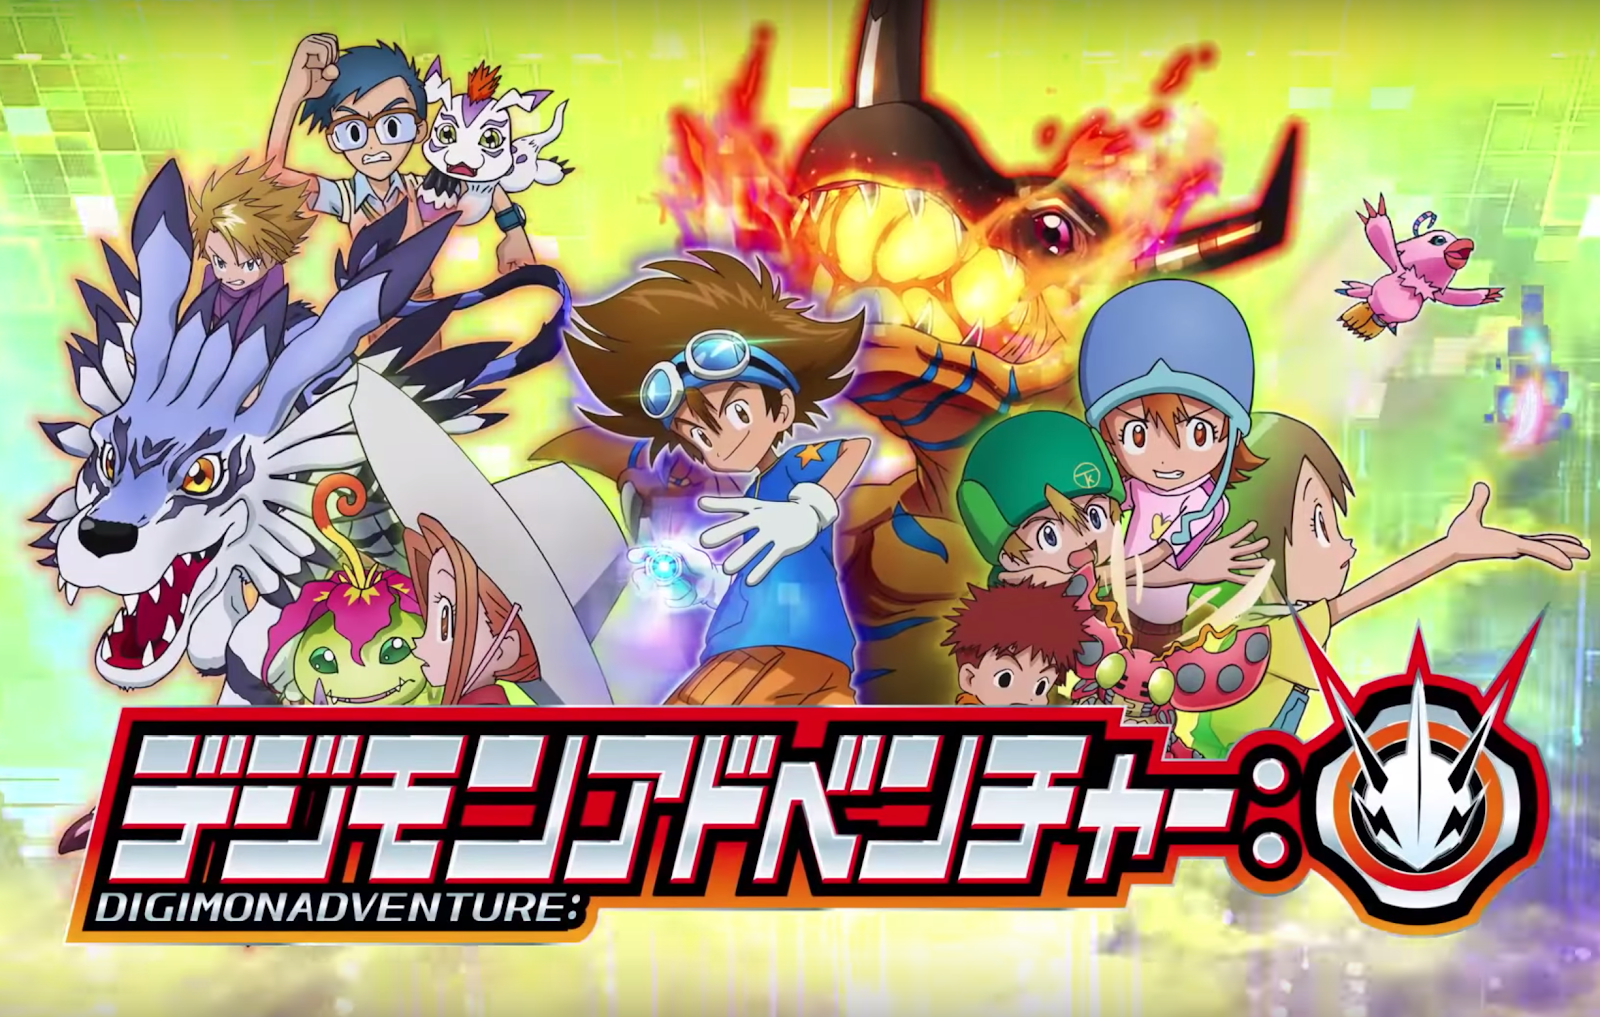 Fatos Nerd - Digimon Adventure ultrapassa a novela